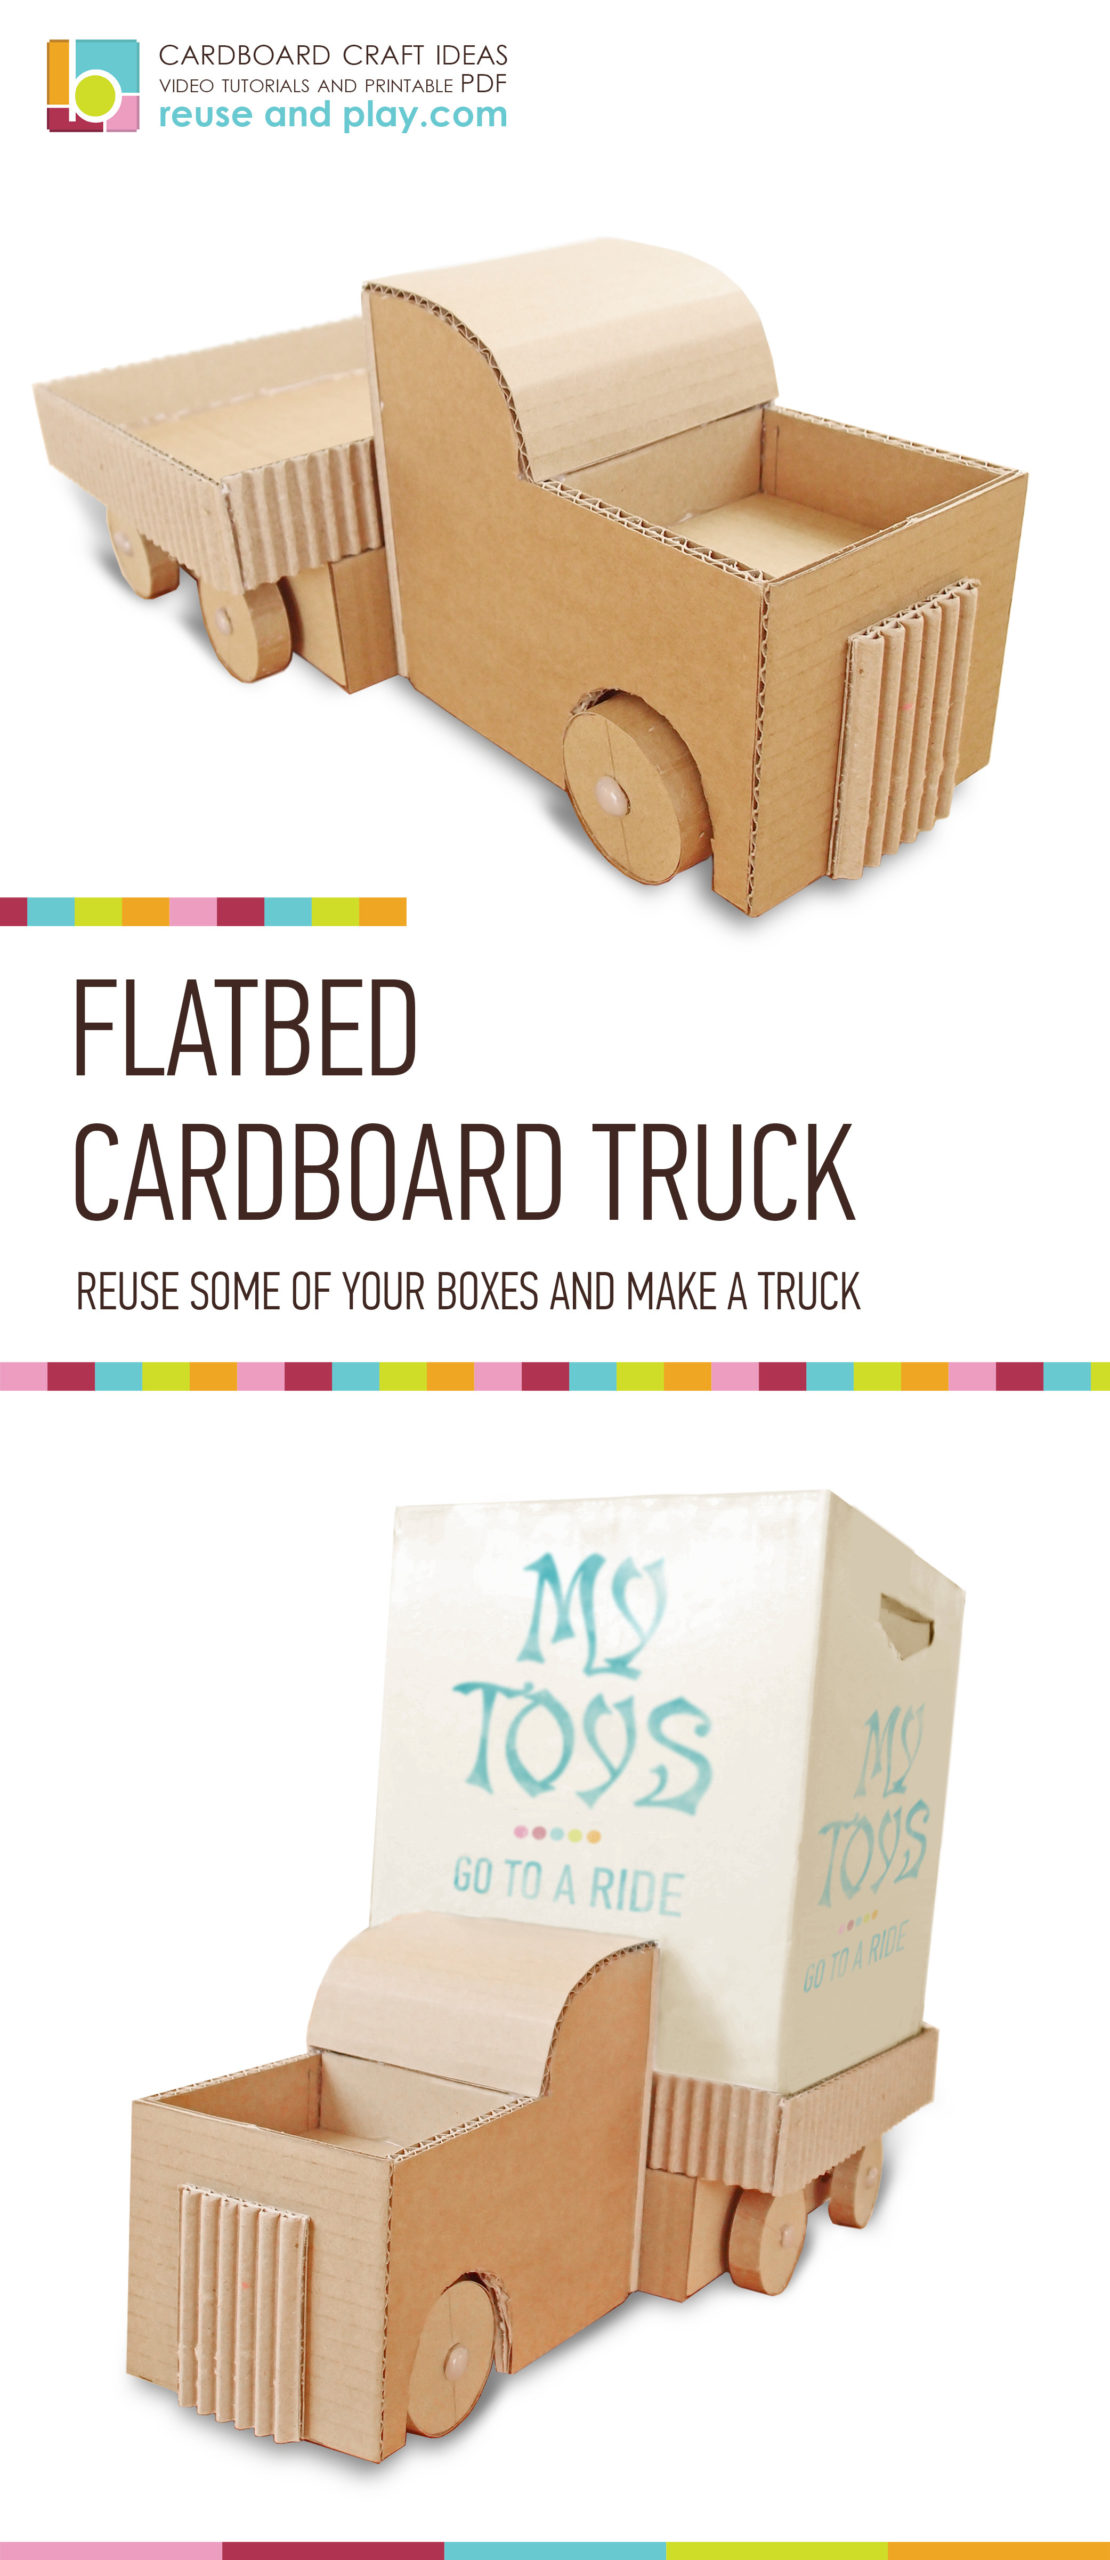 Flatbed Cardboard track DIY